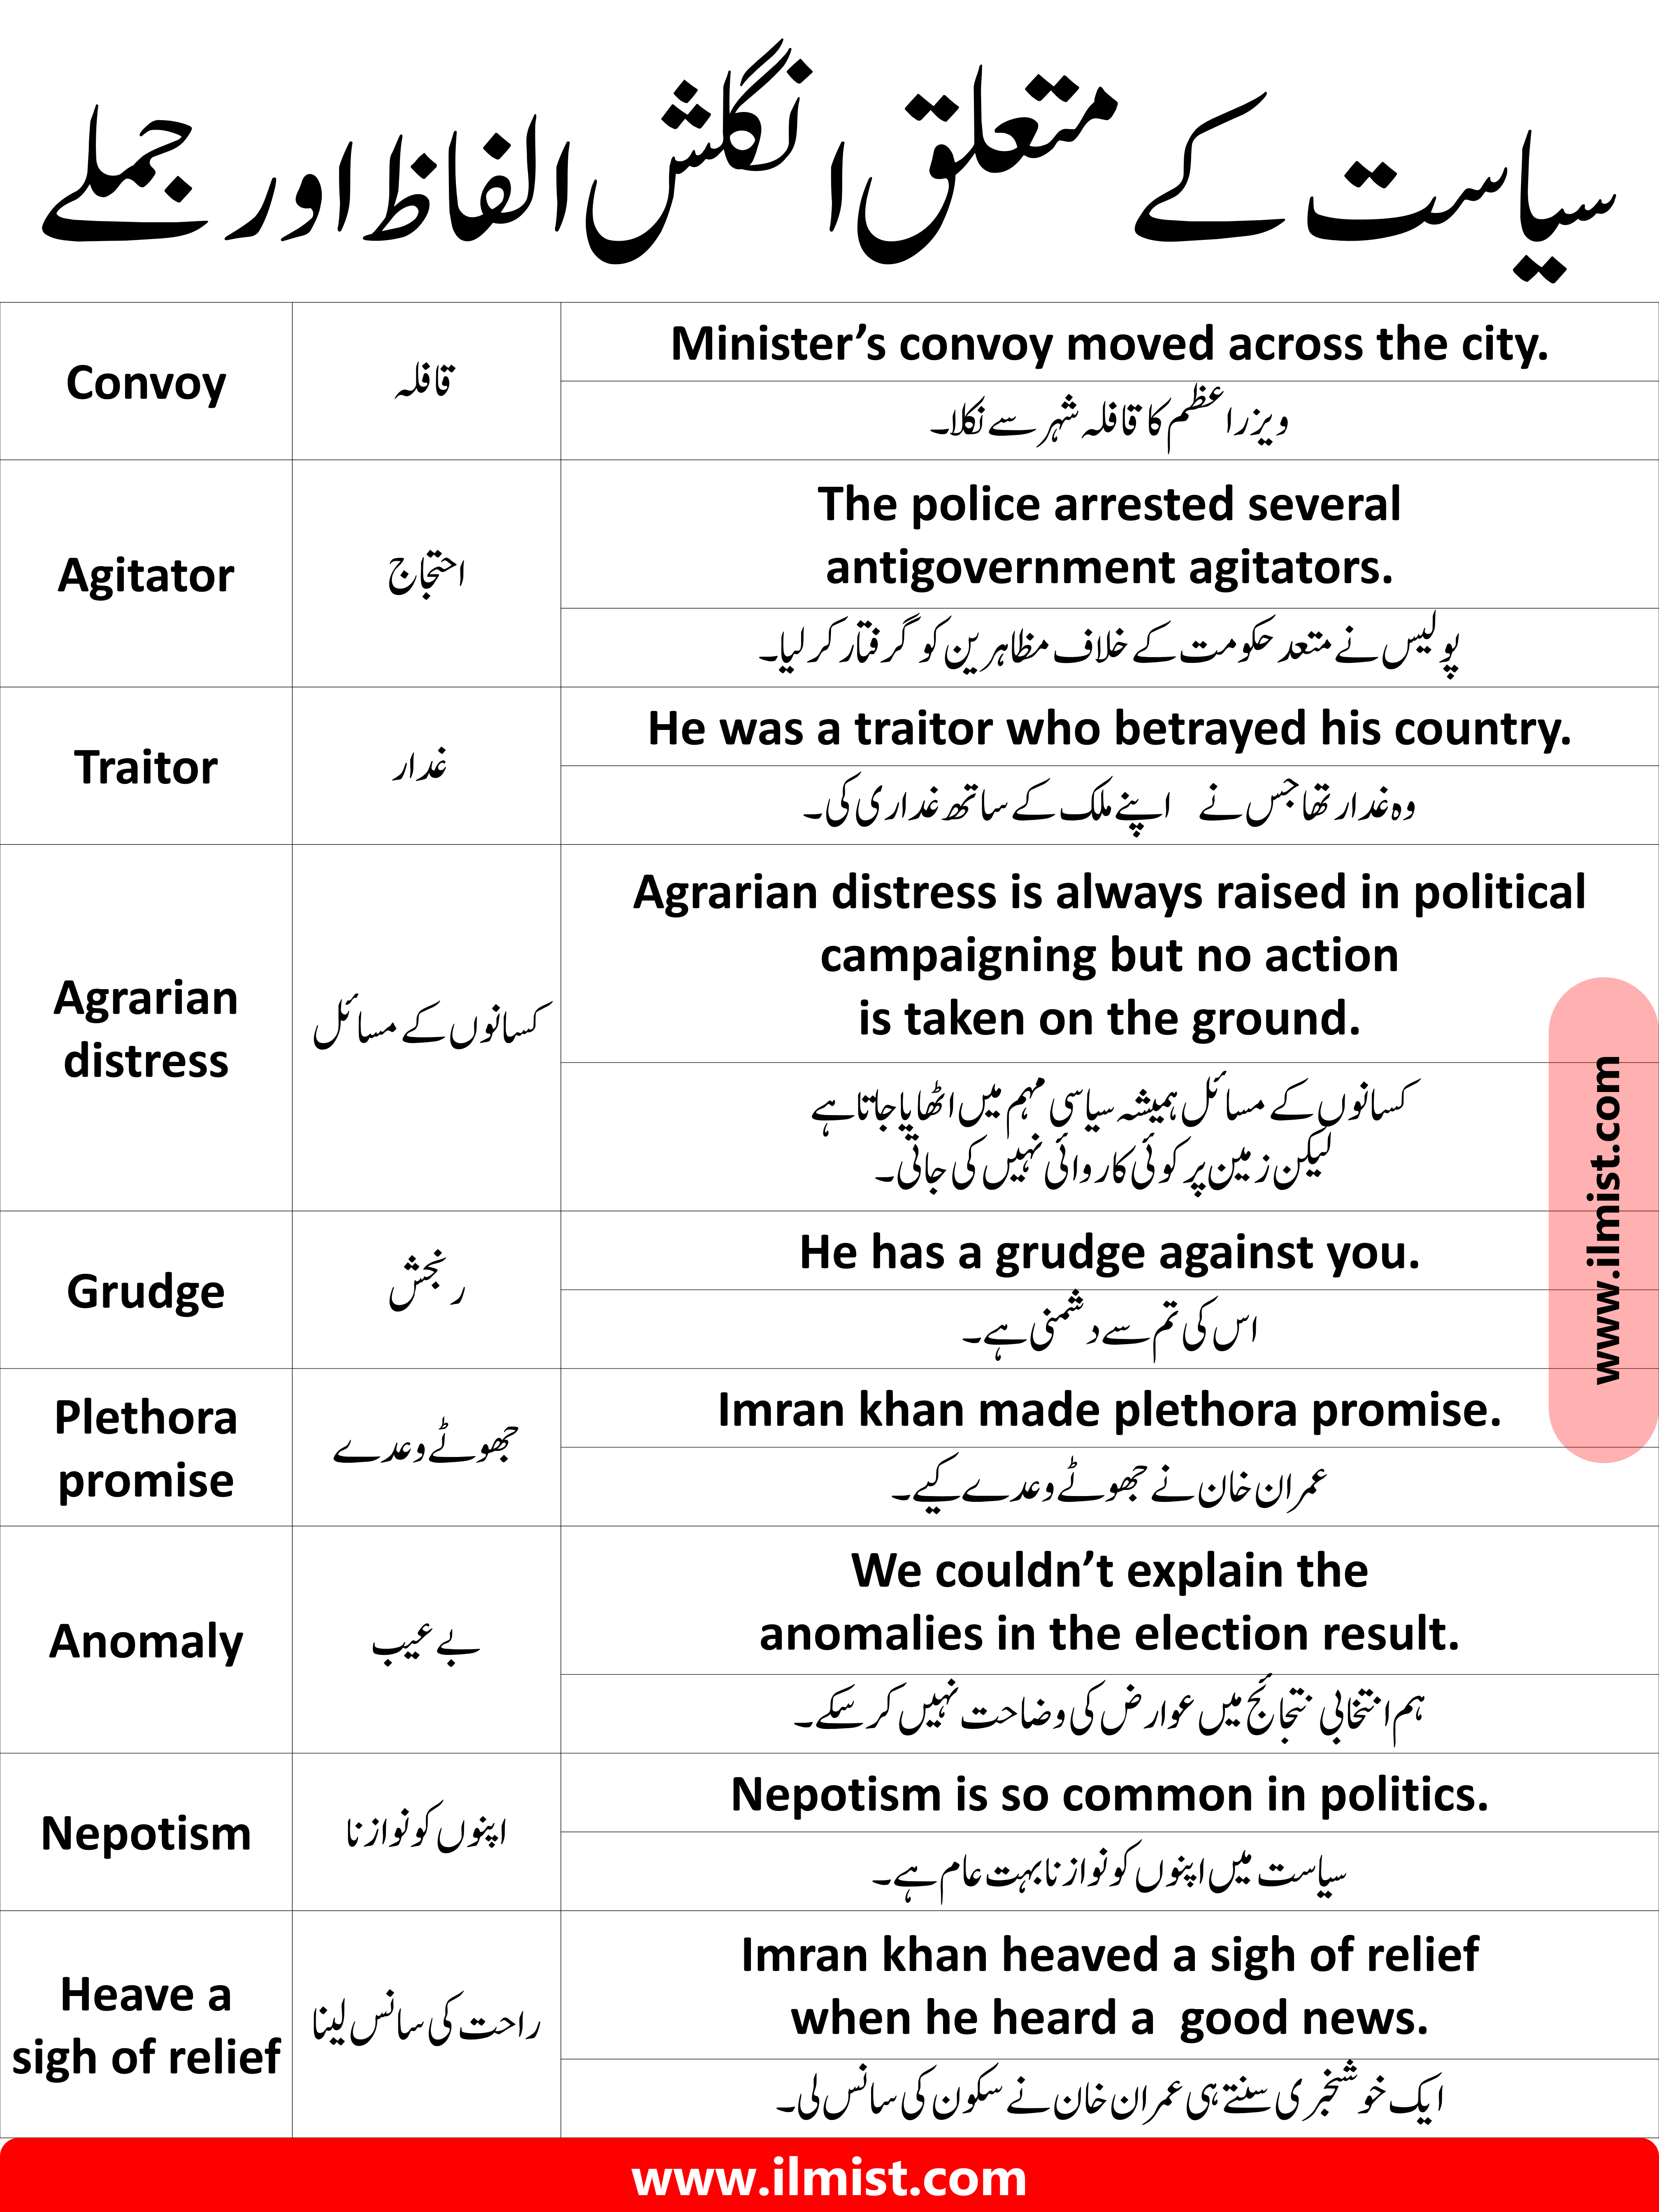 50+ Politics English Vocabulary Words and Sentences